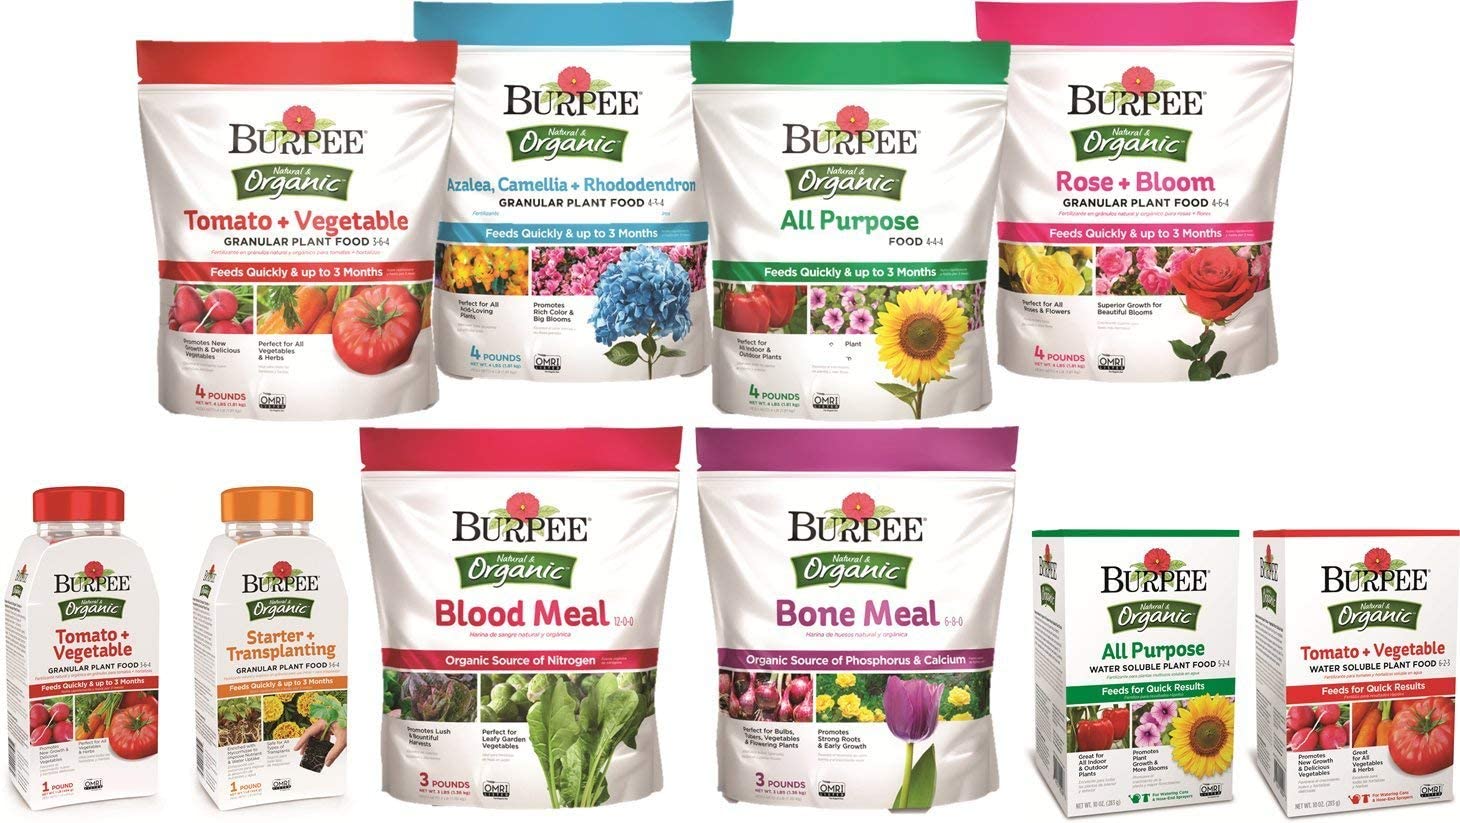 Burpee Organic Blood Meal Fertilizer 3 lb Pack of 2 